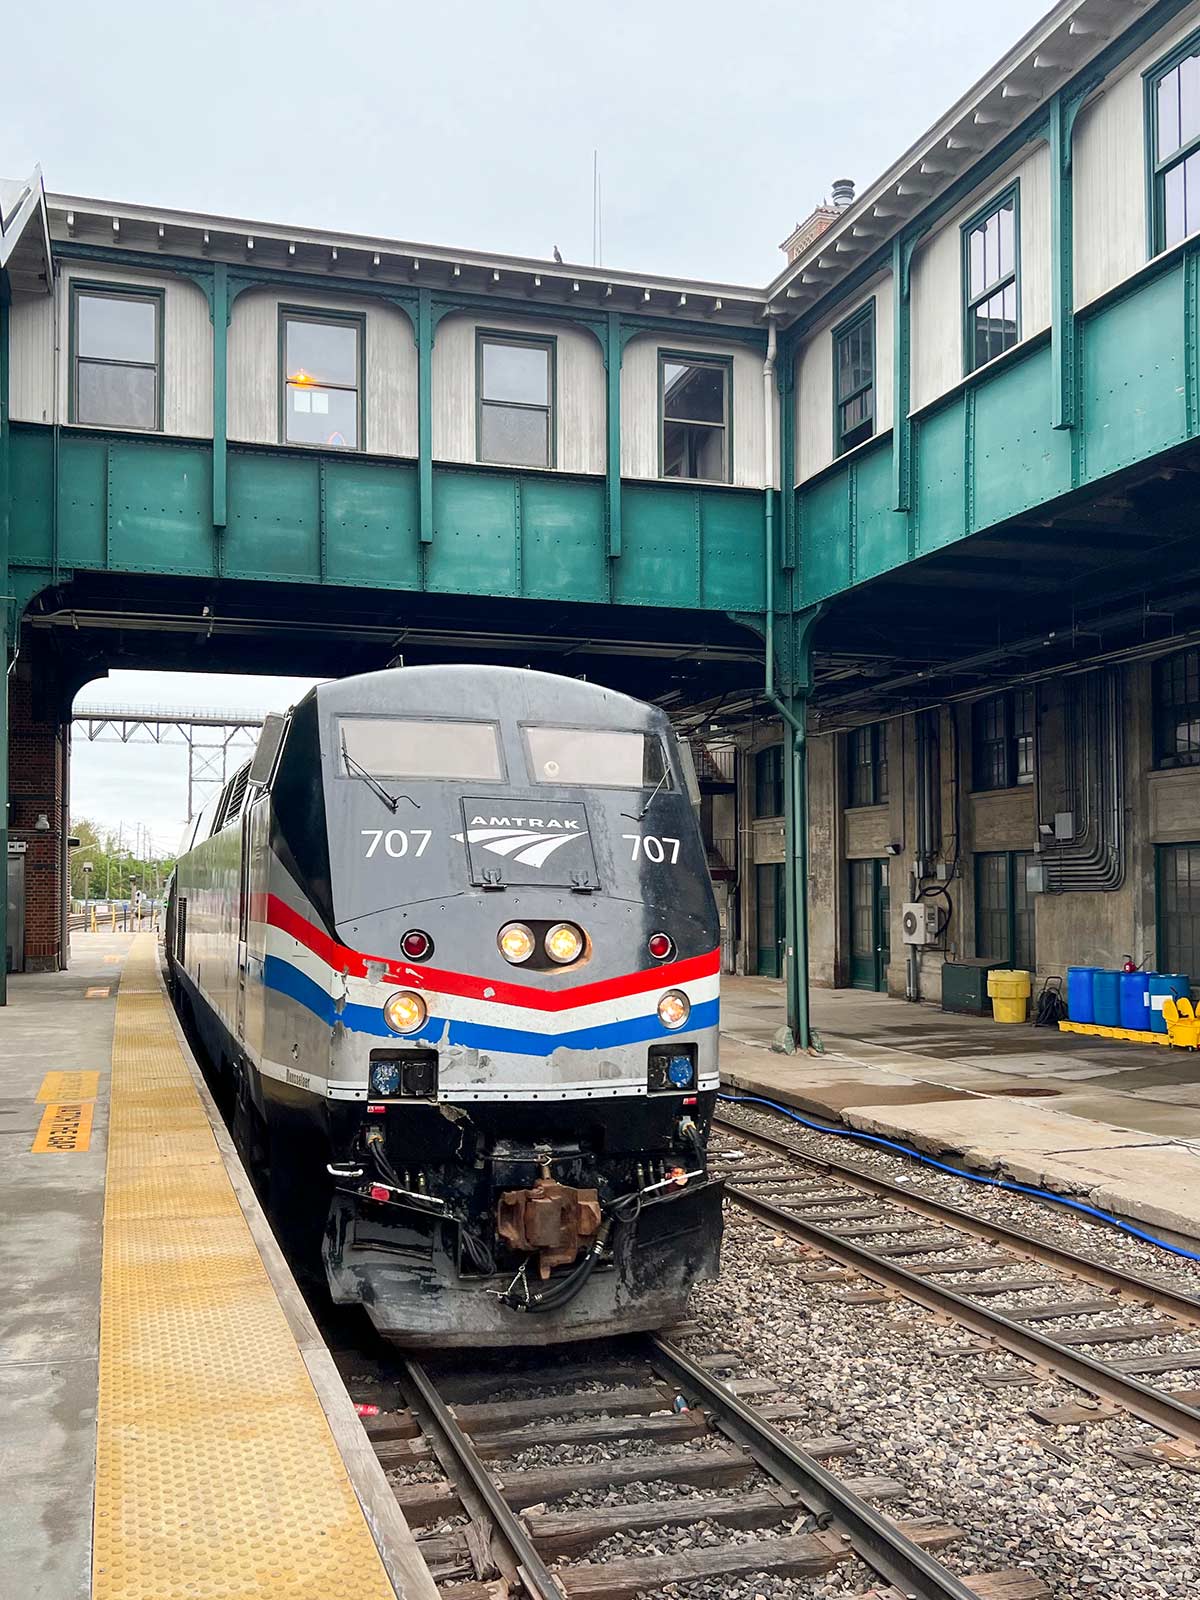 Train, Gare de train de Poughkeepsie, New York, États-Unis / Poughkeepsie Train Station, NY, USA